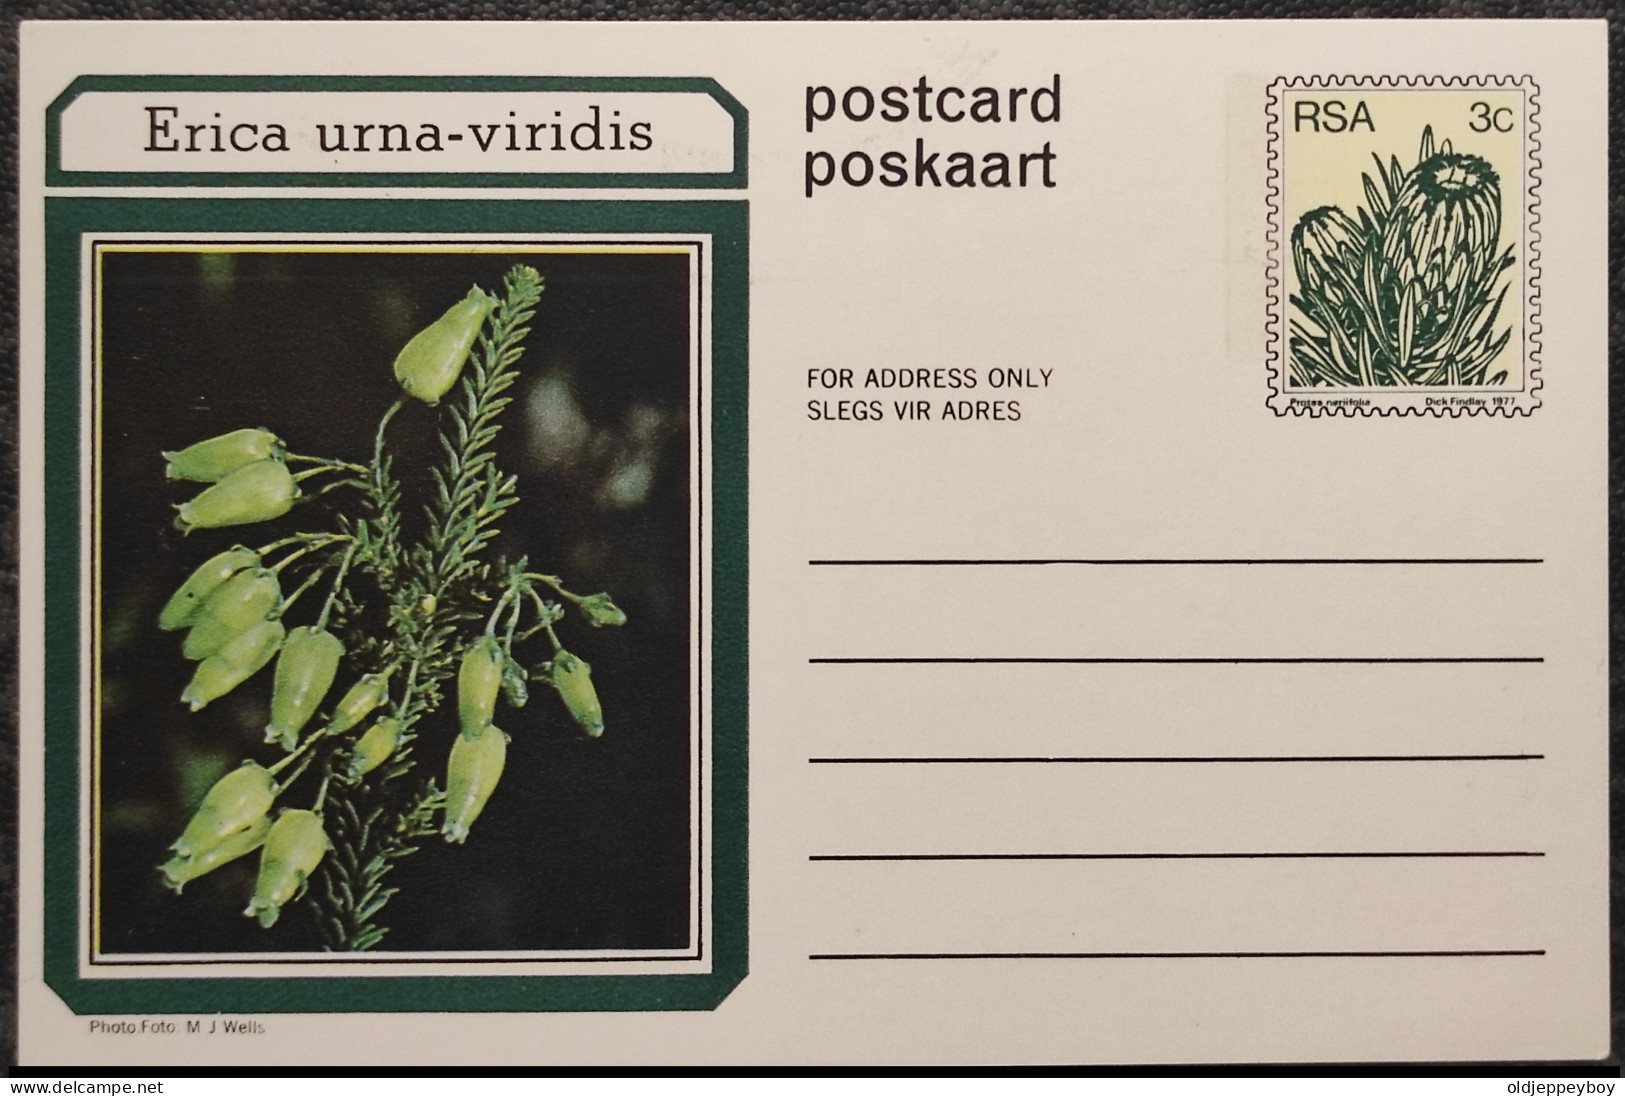 8c SOUTH AFRICA Postal STATIONERY CARD Illus ERICA URNA VIRIDIS FLOWER Cover Stamps Flowers Rsa - Storia Postale